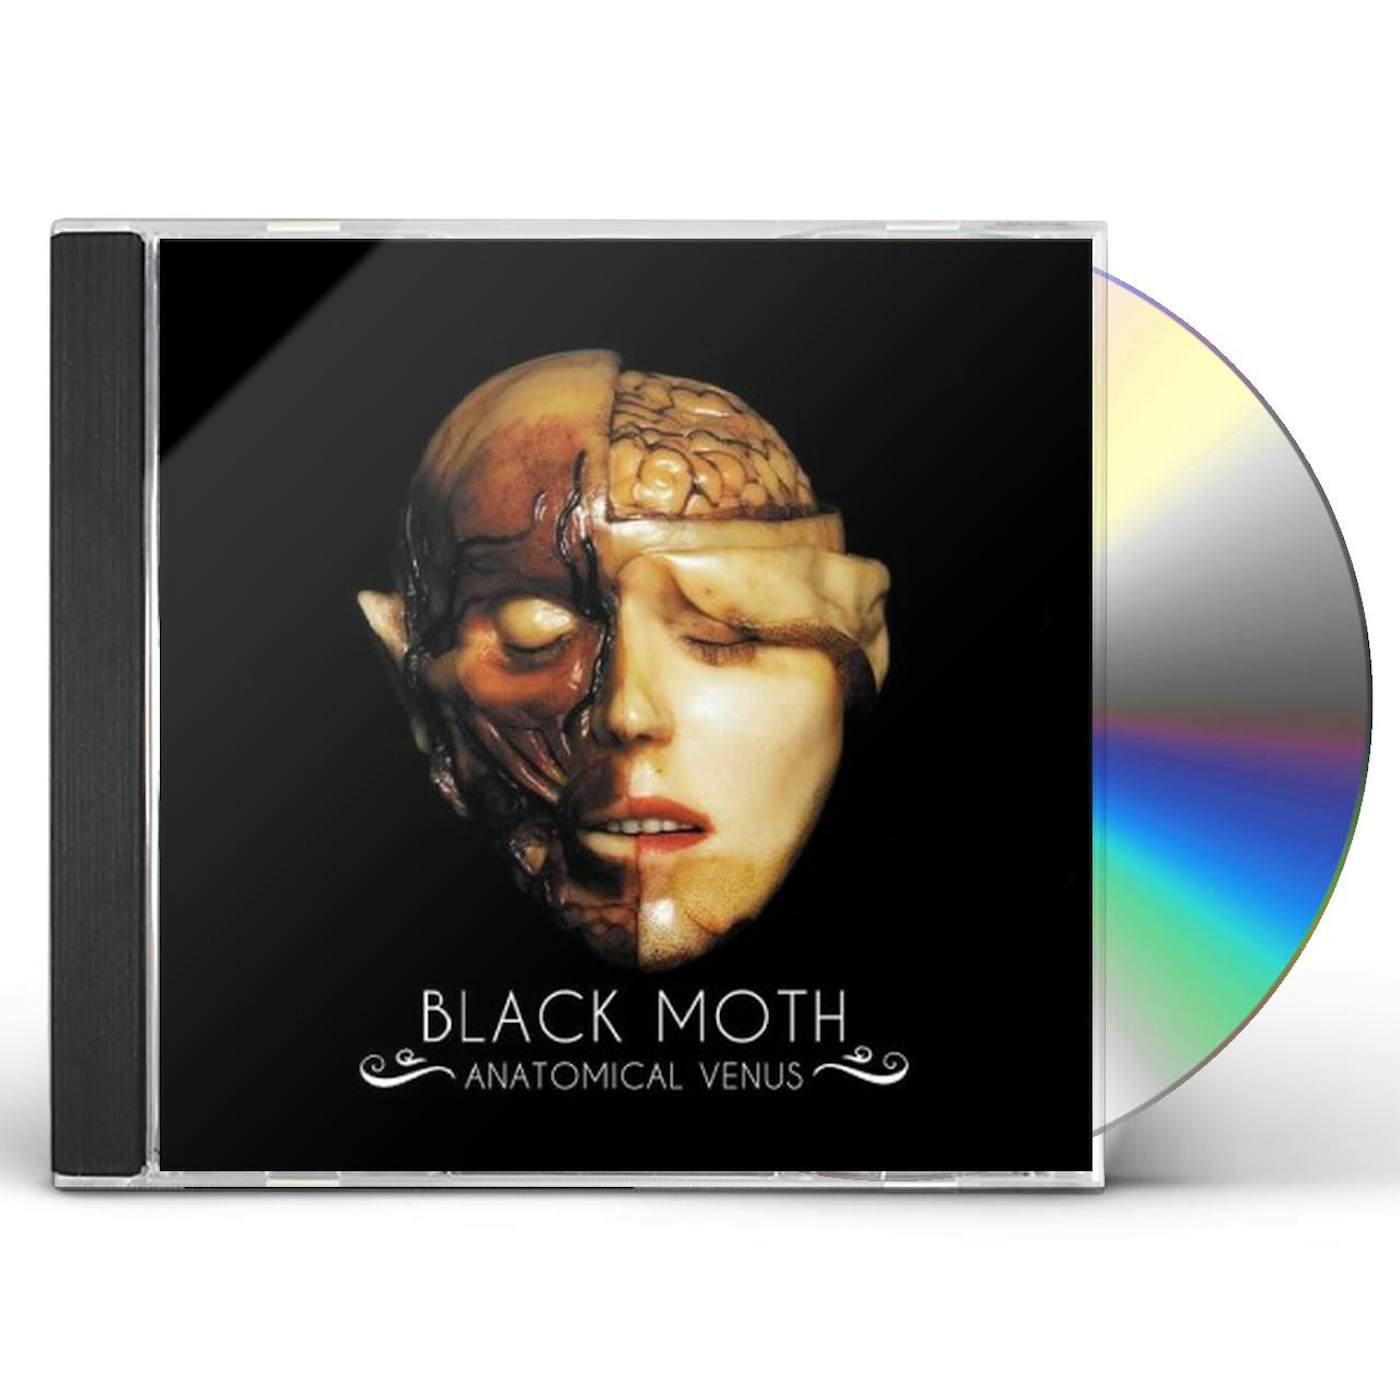 Black Moth ANATOMICAL VENUS CD